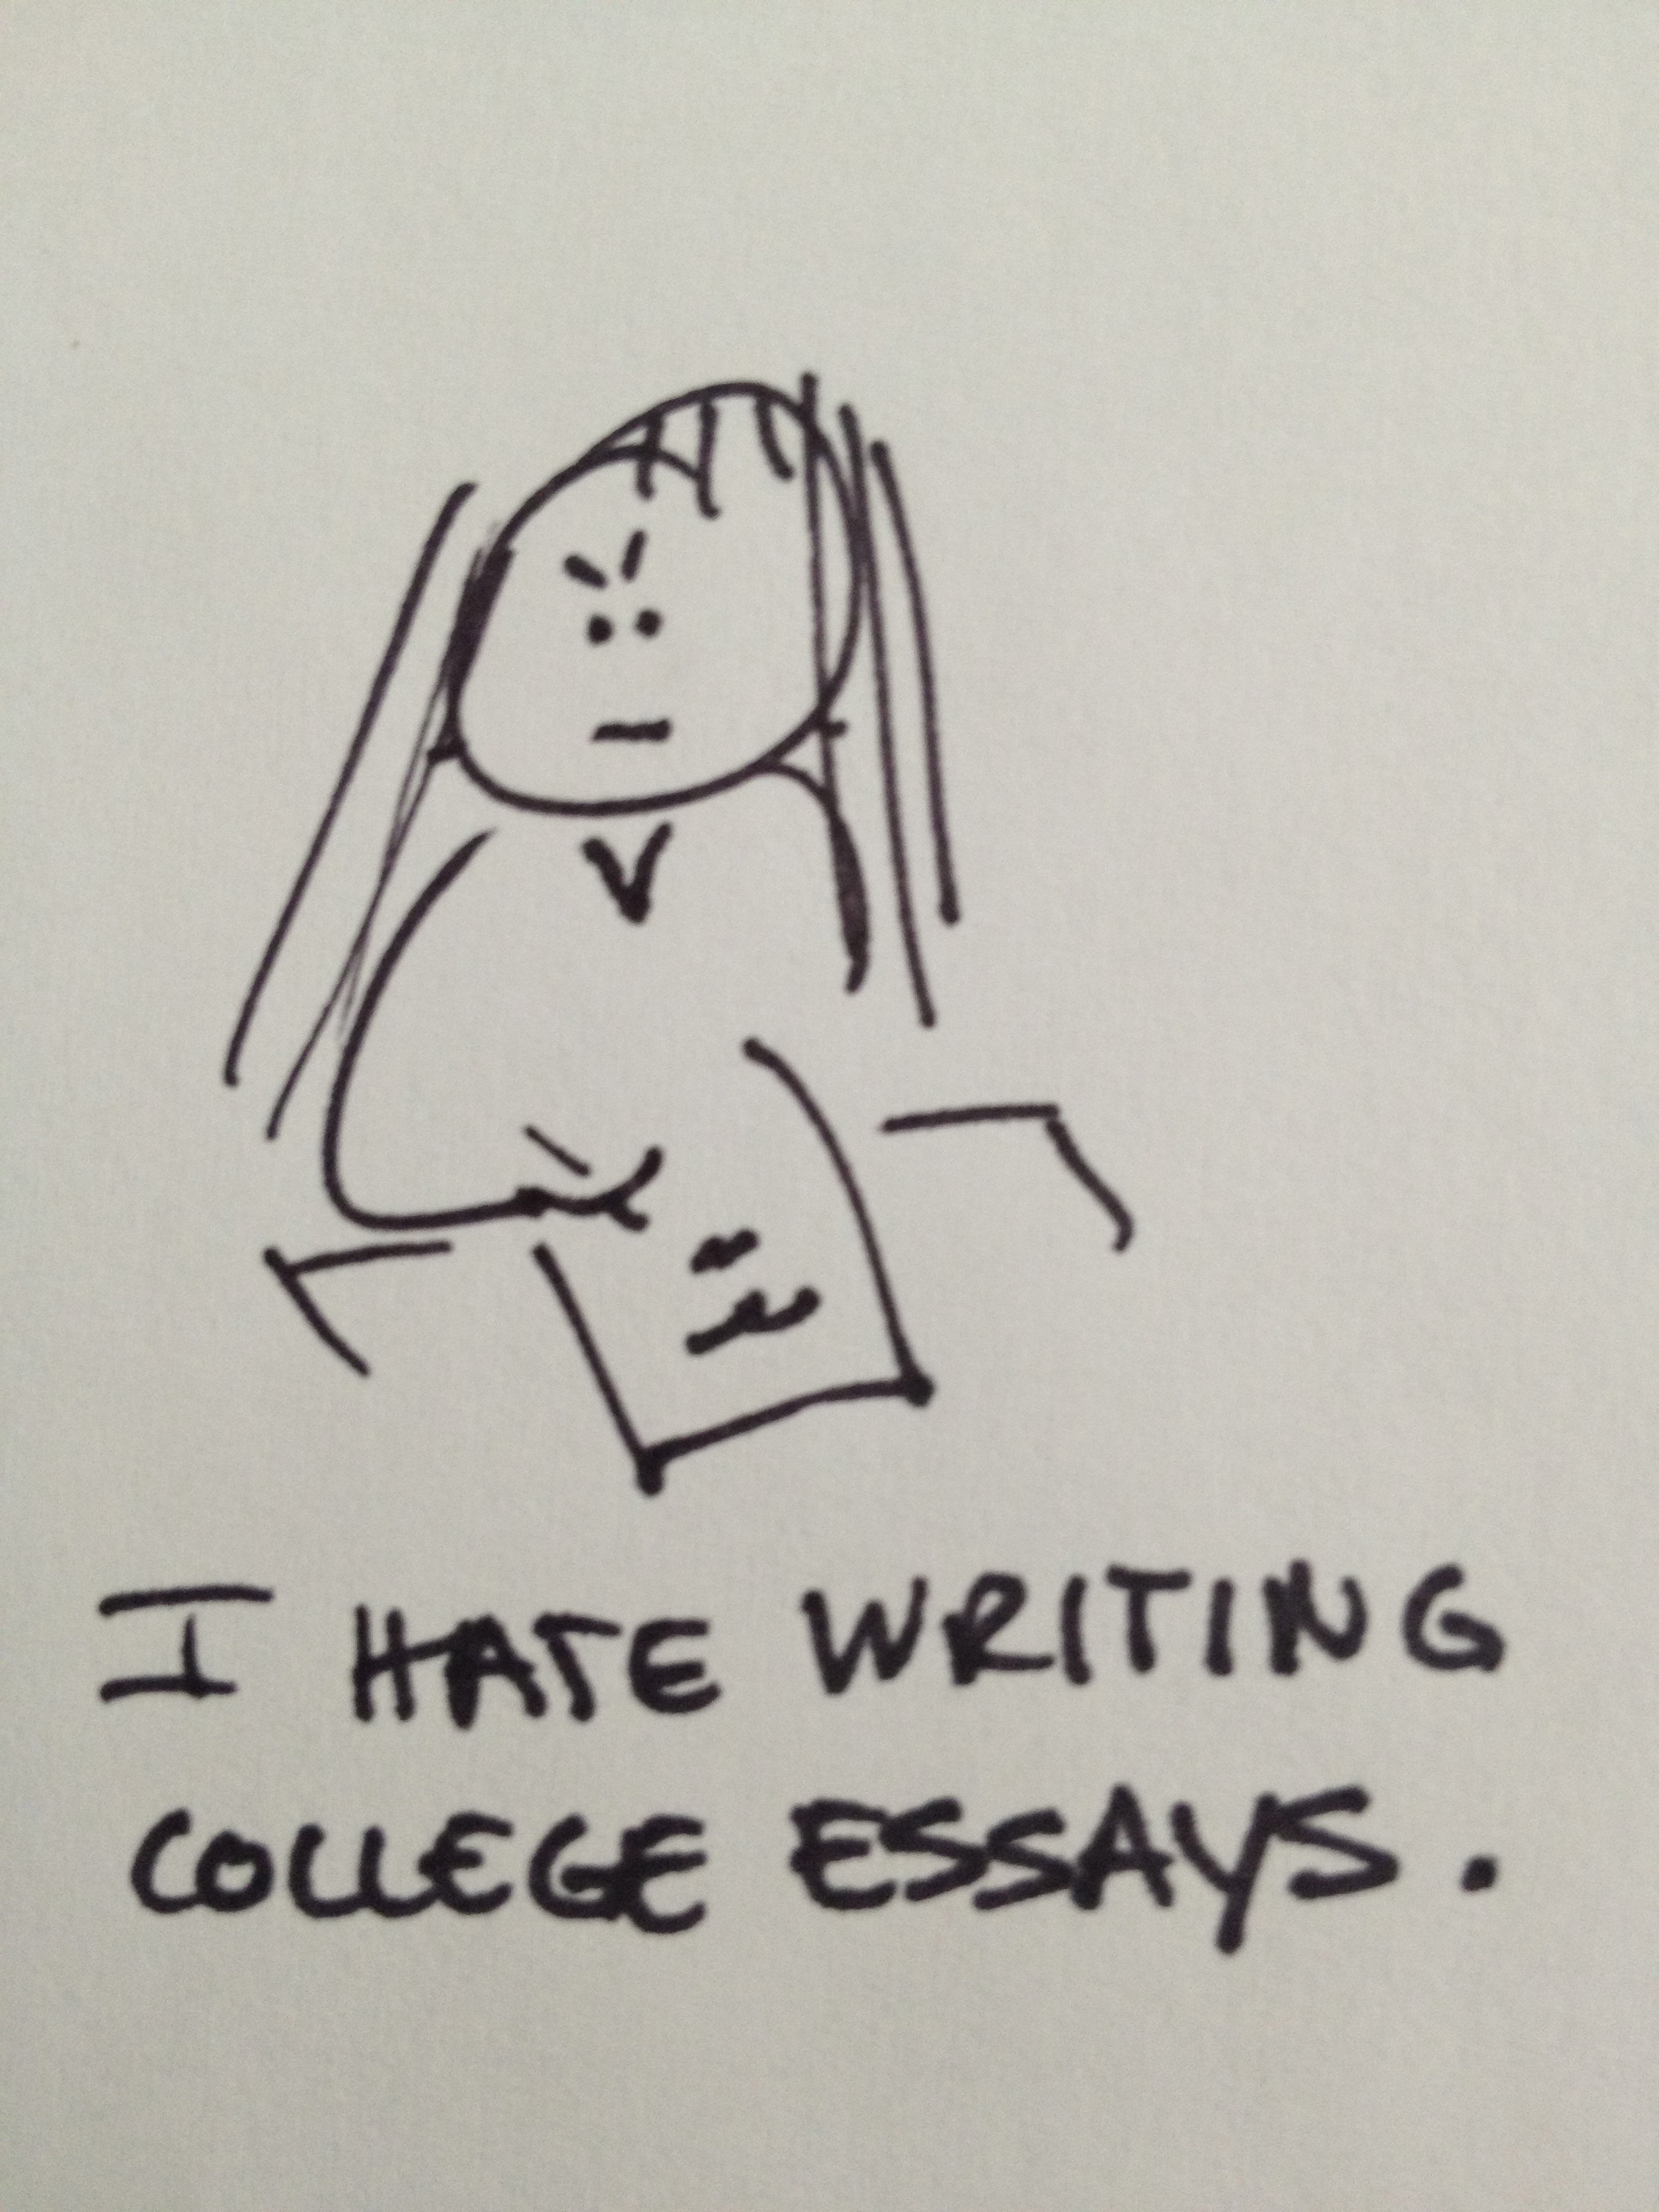 Running college essay